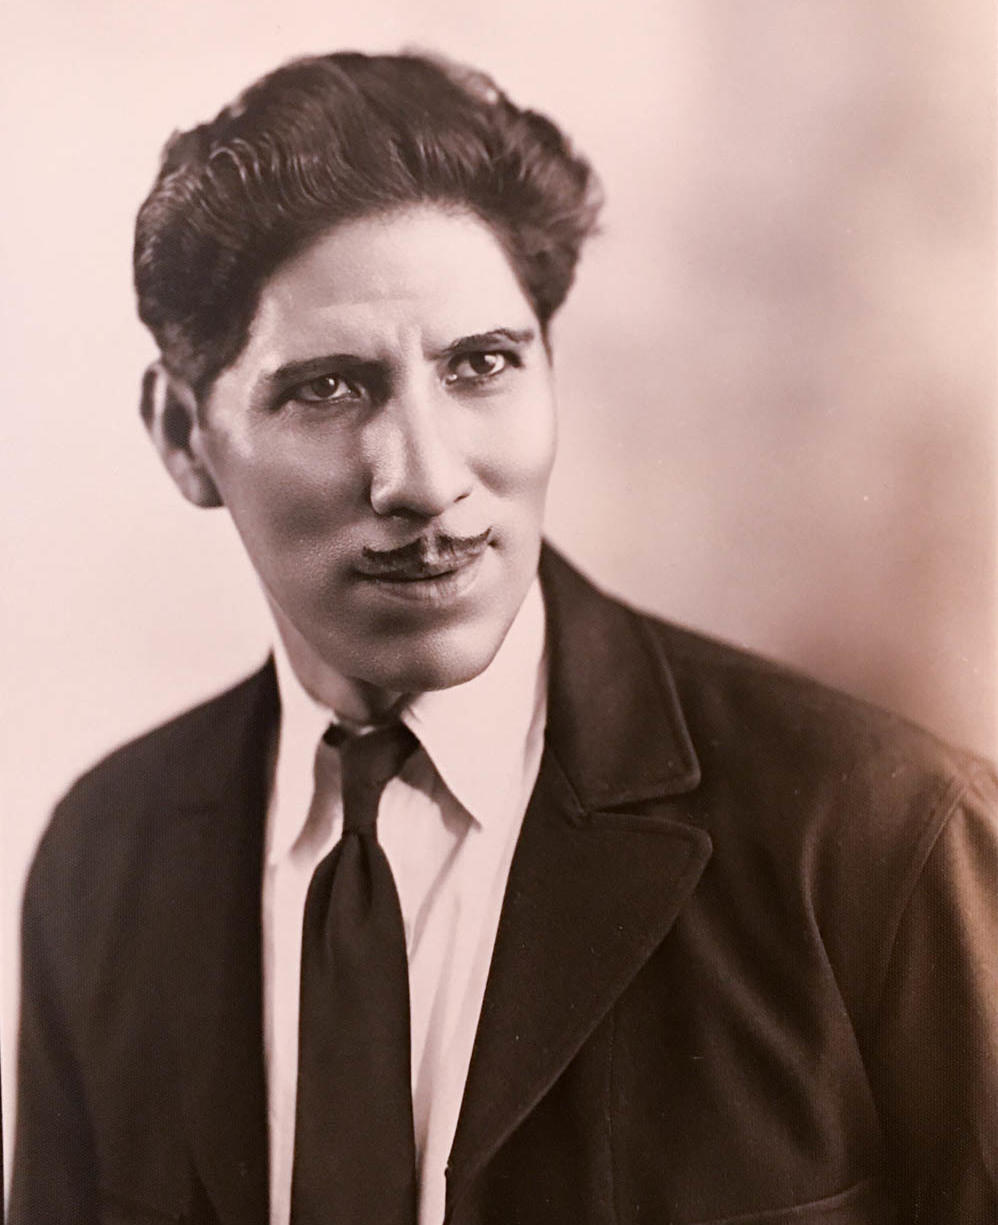 A young Luis M. Moreno, one half of the musical duo Los Moreno.